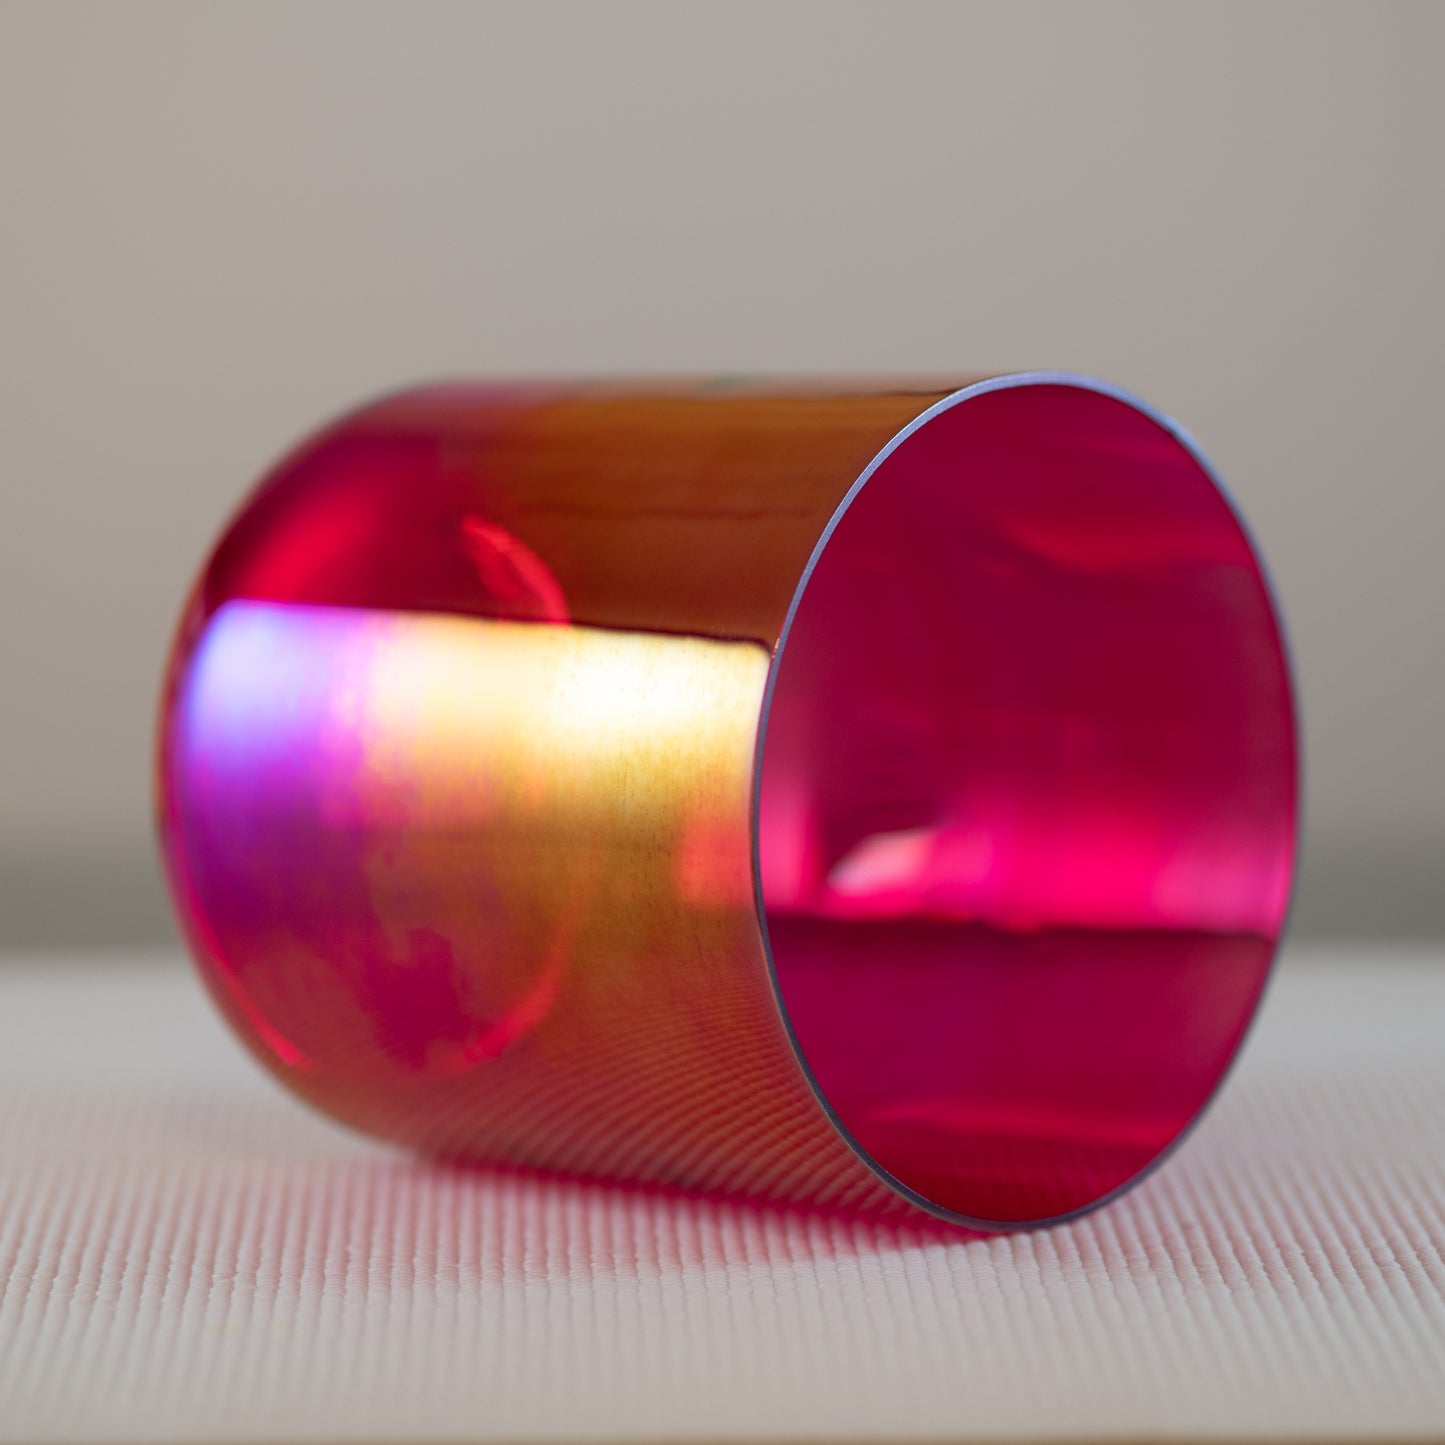 7" B+0 Ruby Color Crystal Singing Bowl, Prismatic, Sacred Singing Bowls